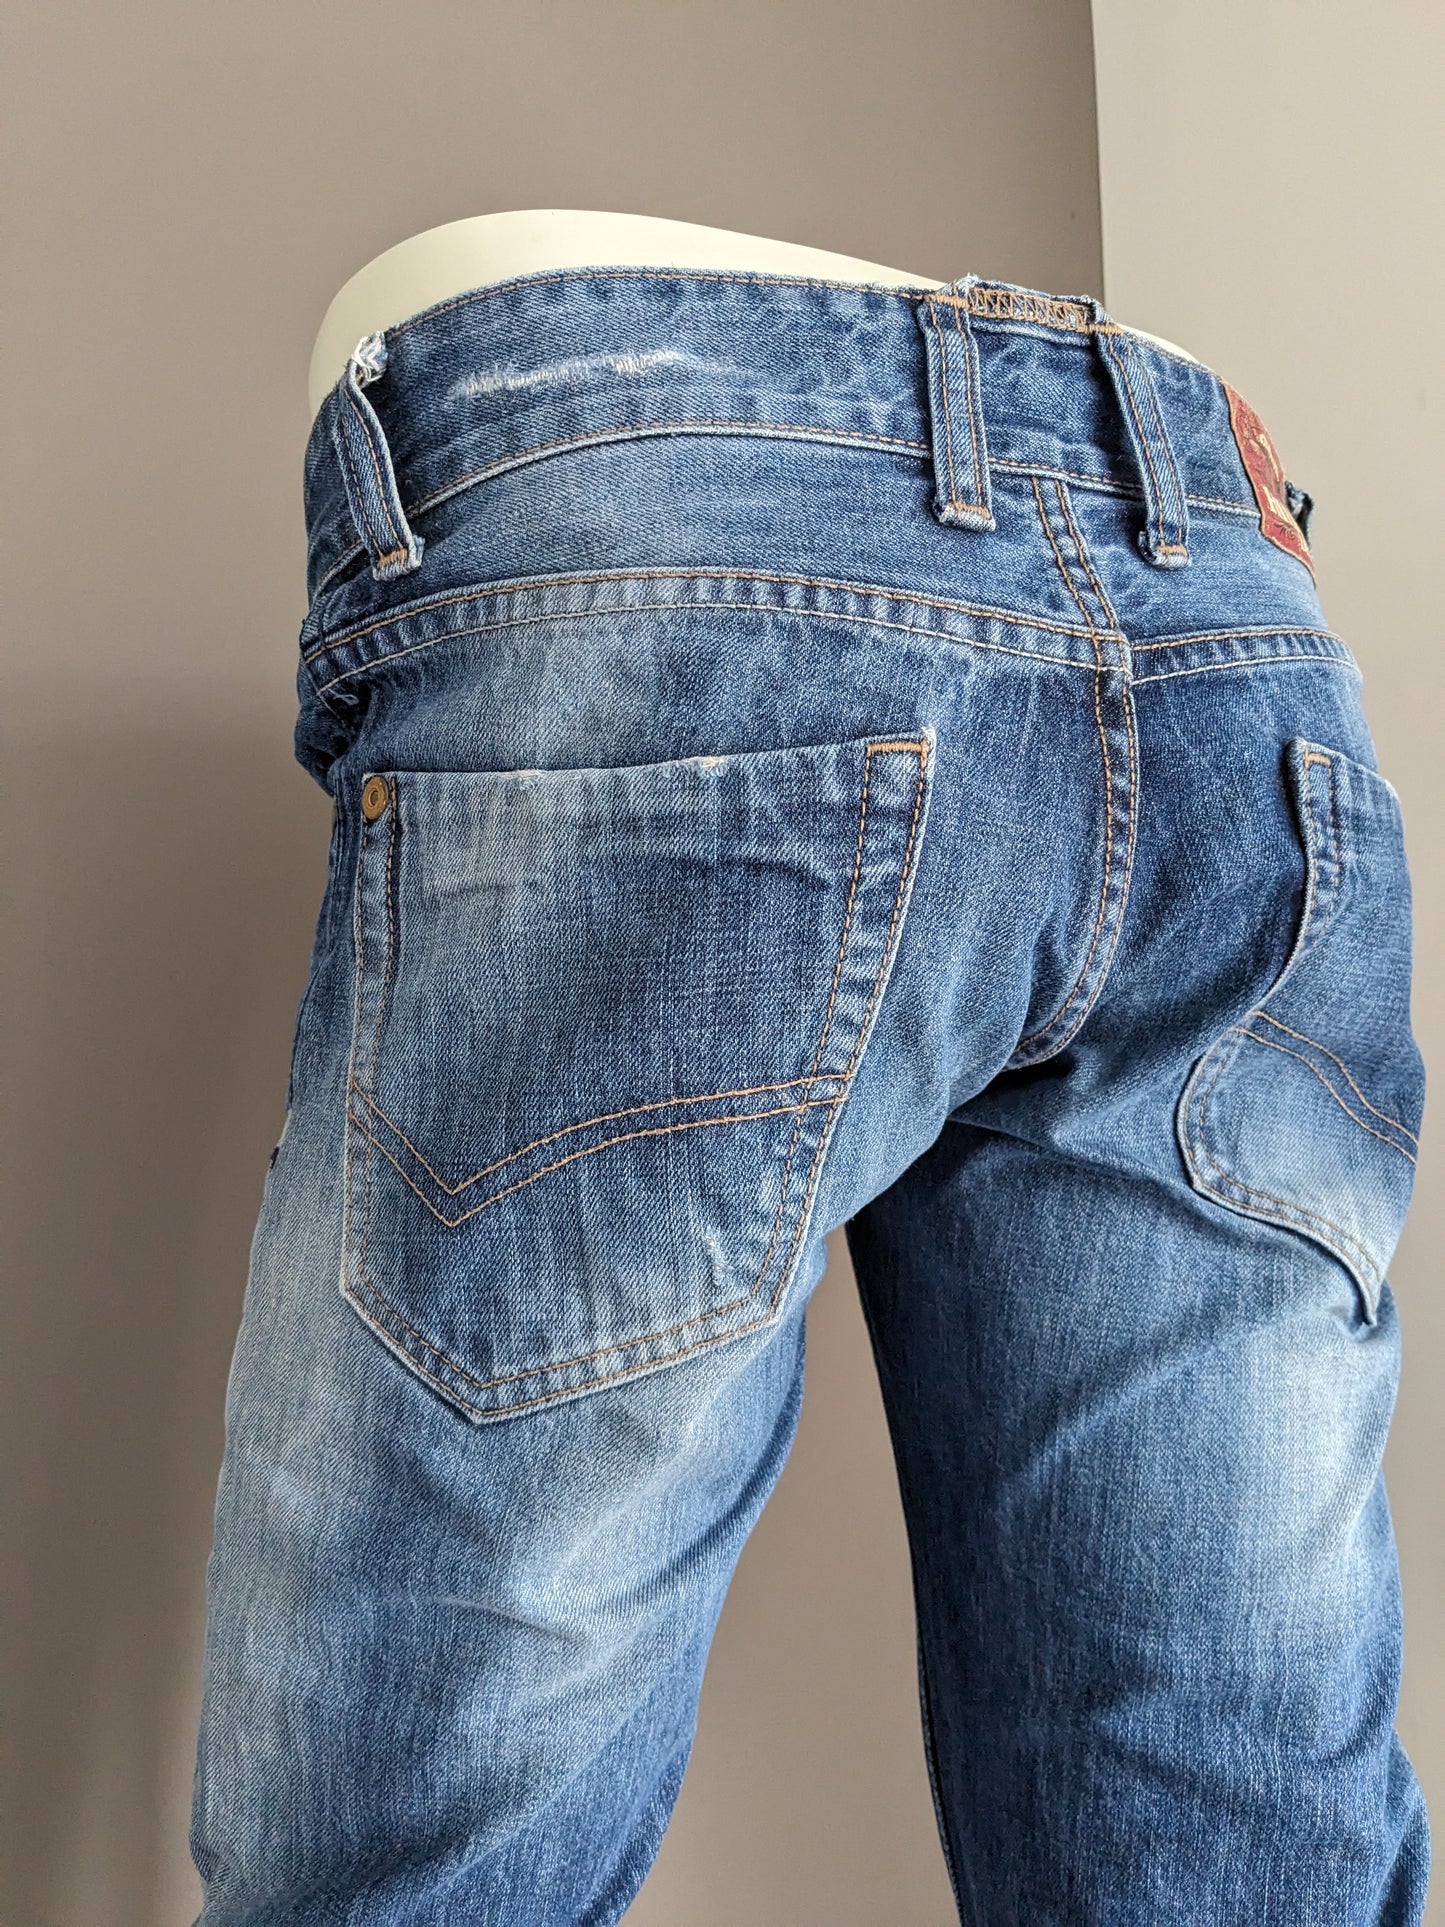 Tommy Hilfiger Jeans. Blue colored. Size W29 - L32. Type Rogar. Regular fit.